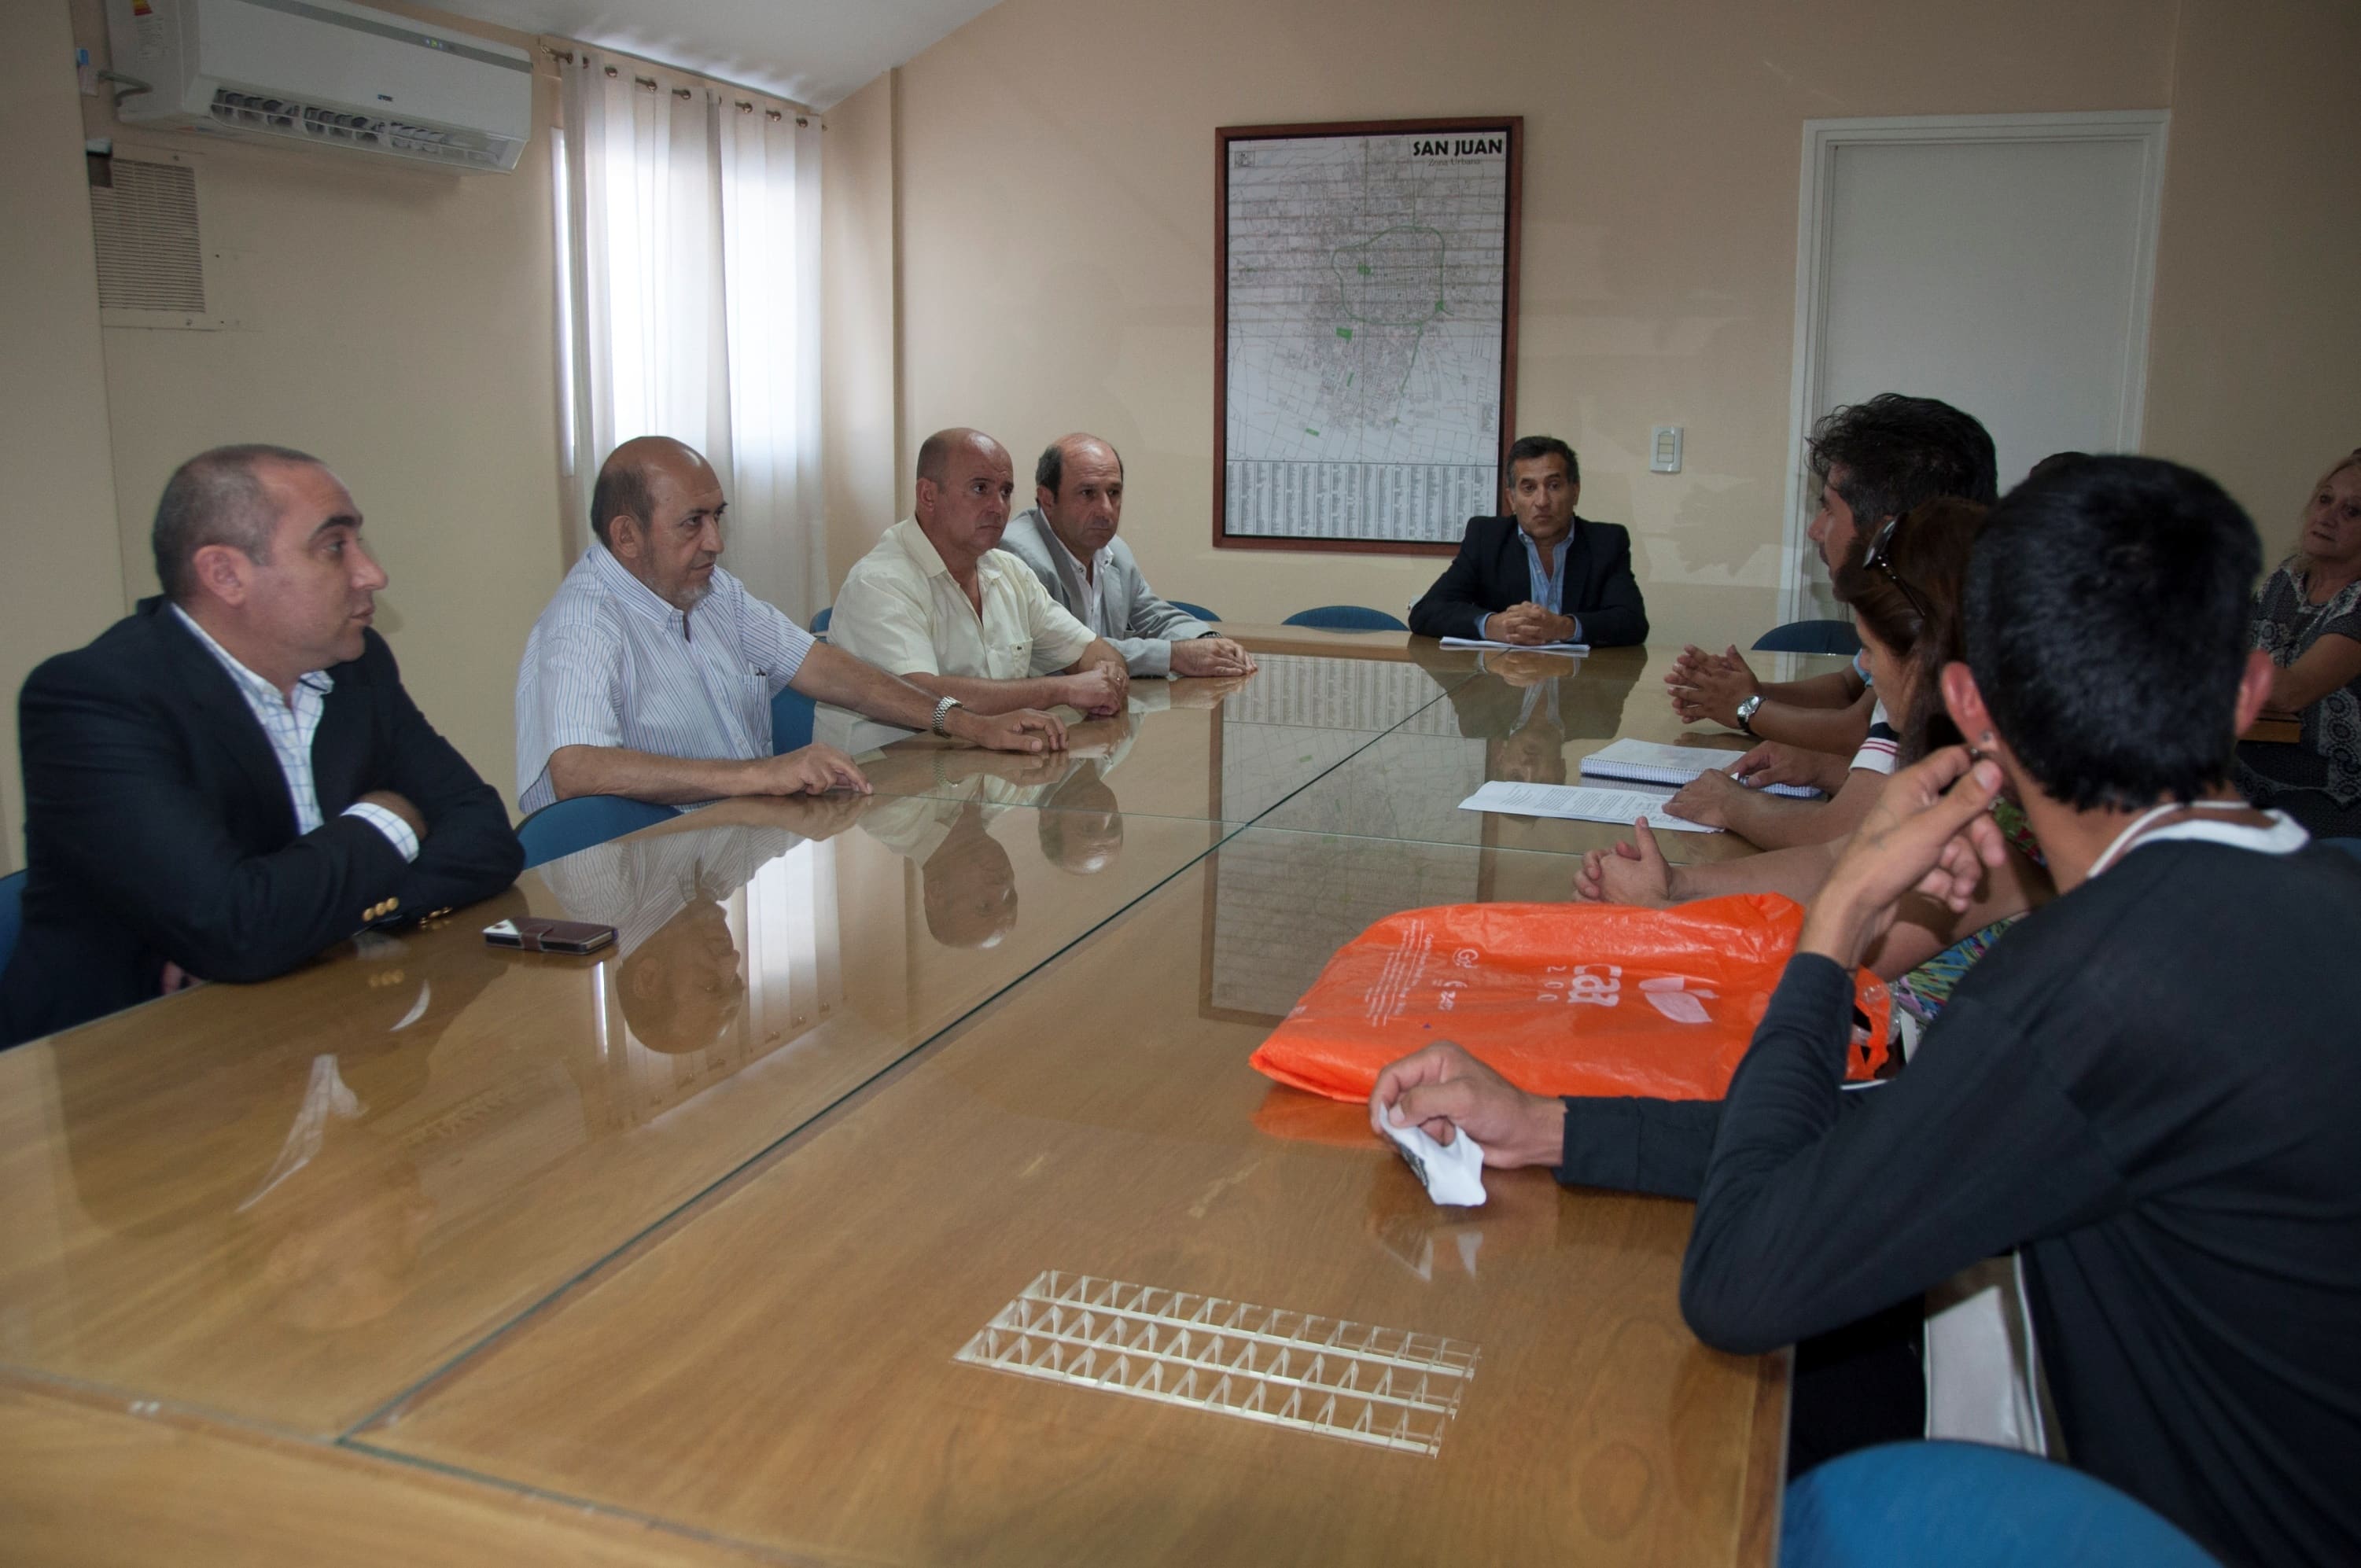 Legisladores provinciales reunidos con miembros de la Asamblea Popular "Jáchal no se toca" en la Legislatura provincial. 